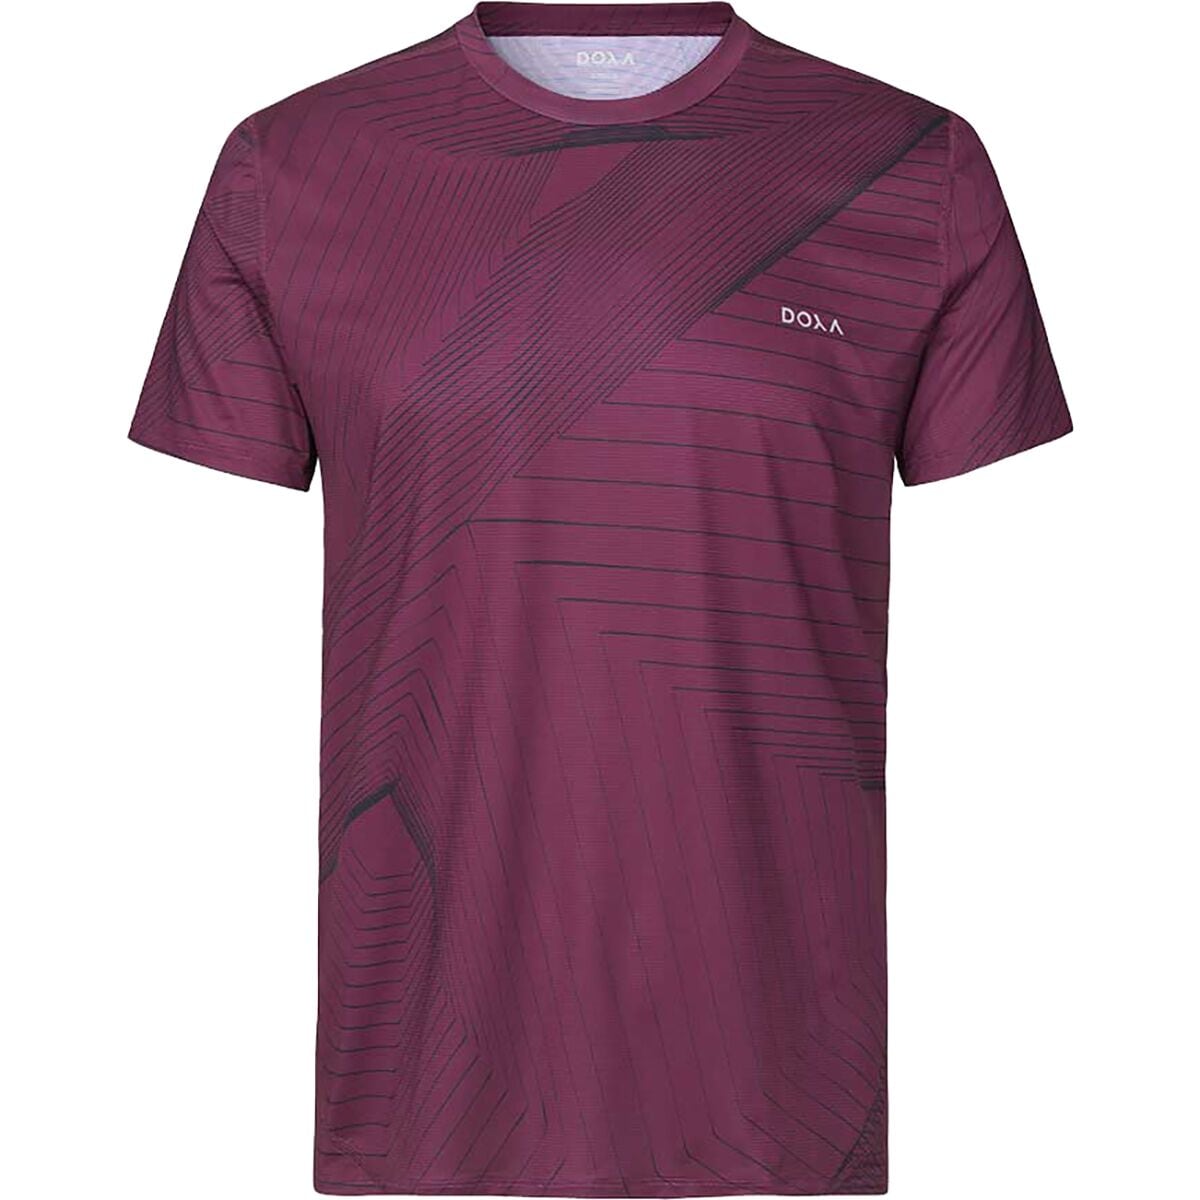 Doxa Run Troy Cubes T-Shirt - Men's - Clothing